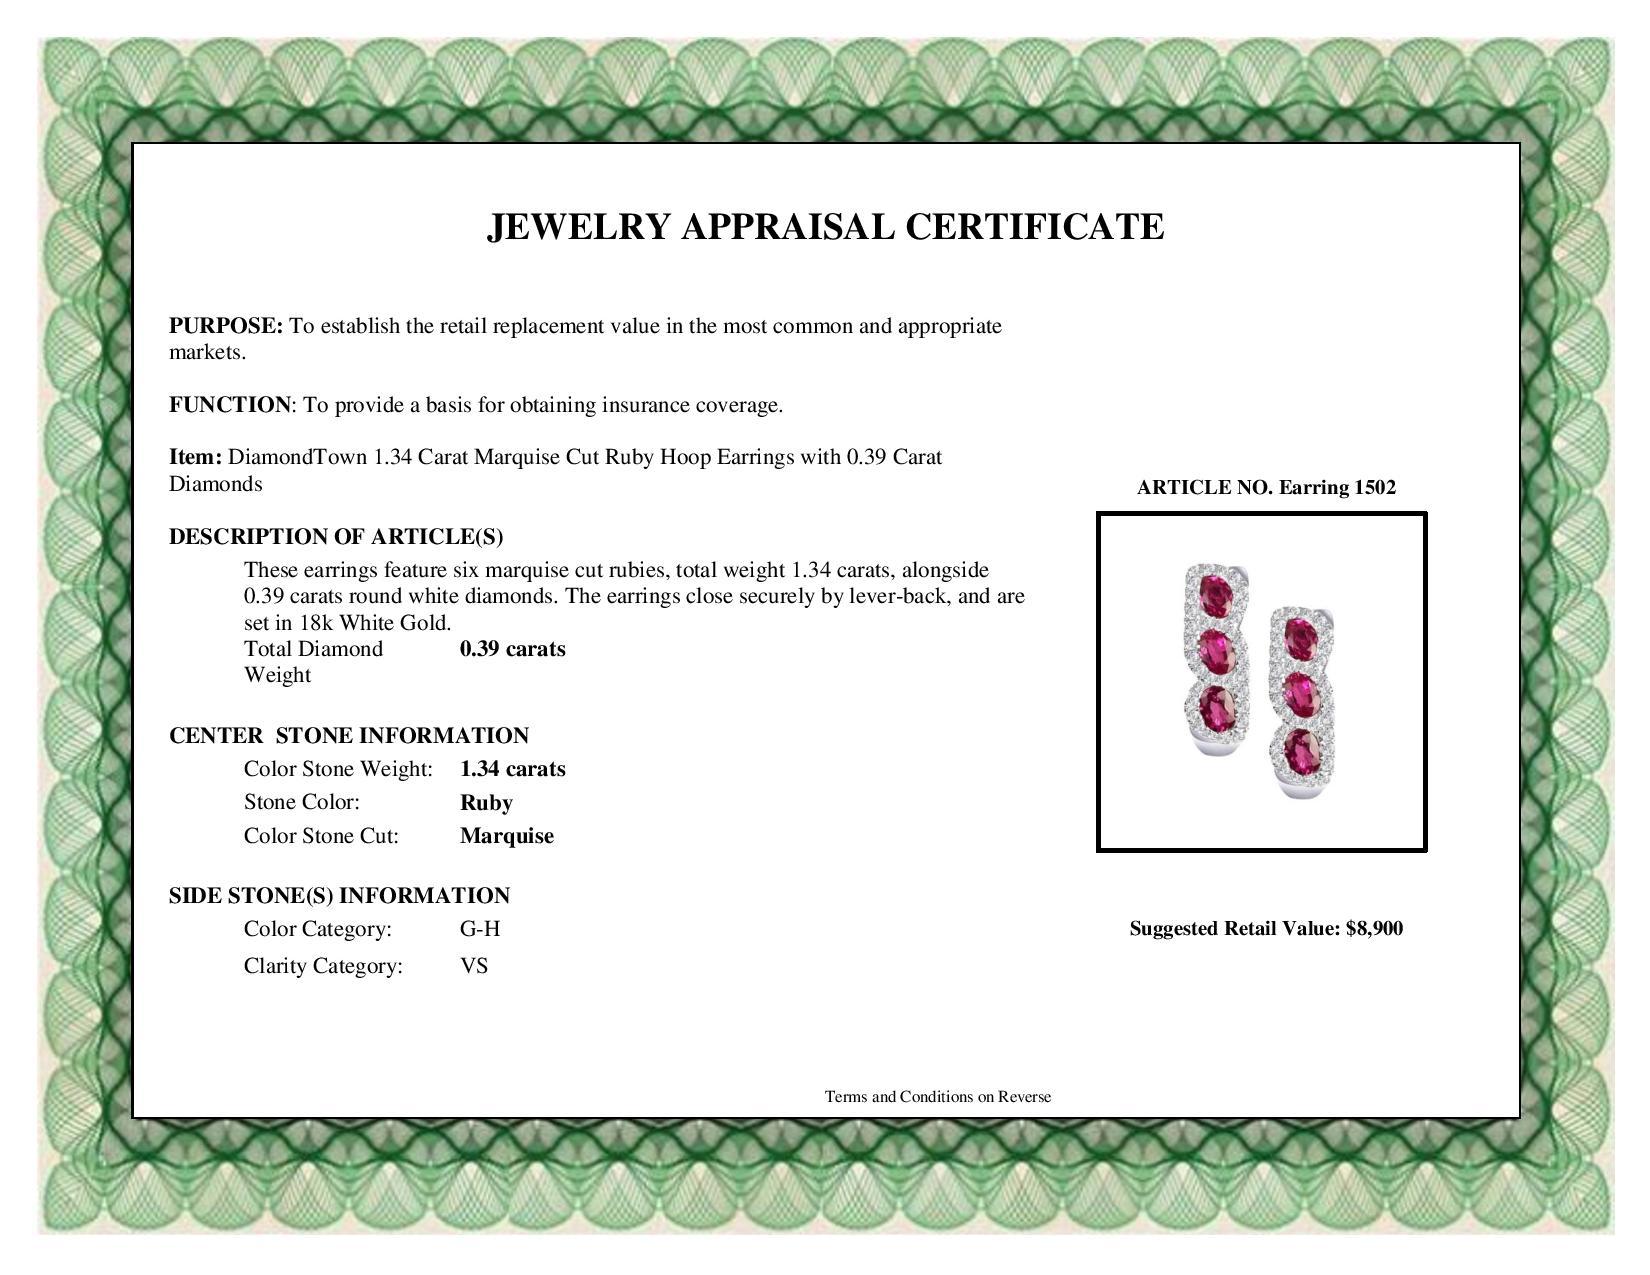 Women's DiamondTown 1.34 Carat Marquise Cut Ruby Hoop Earrings with 0.39 Carat Diamonds